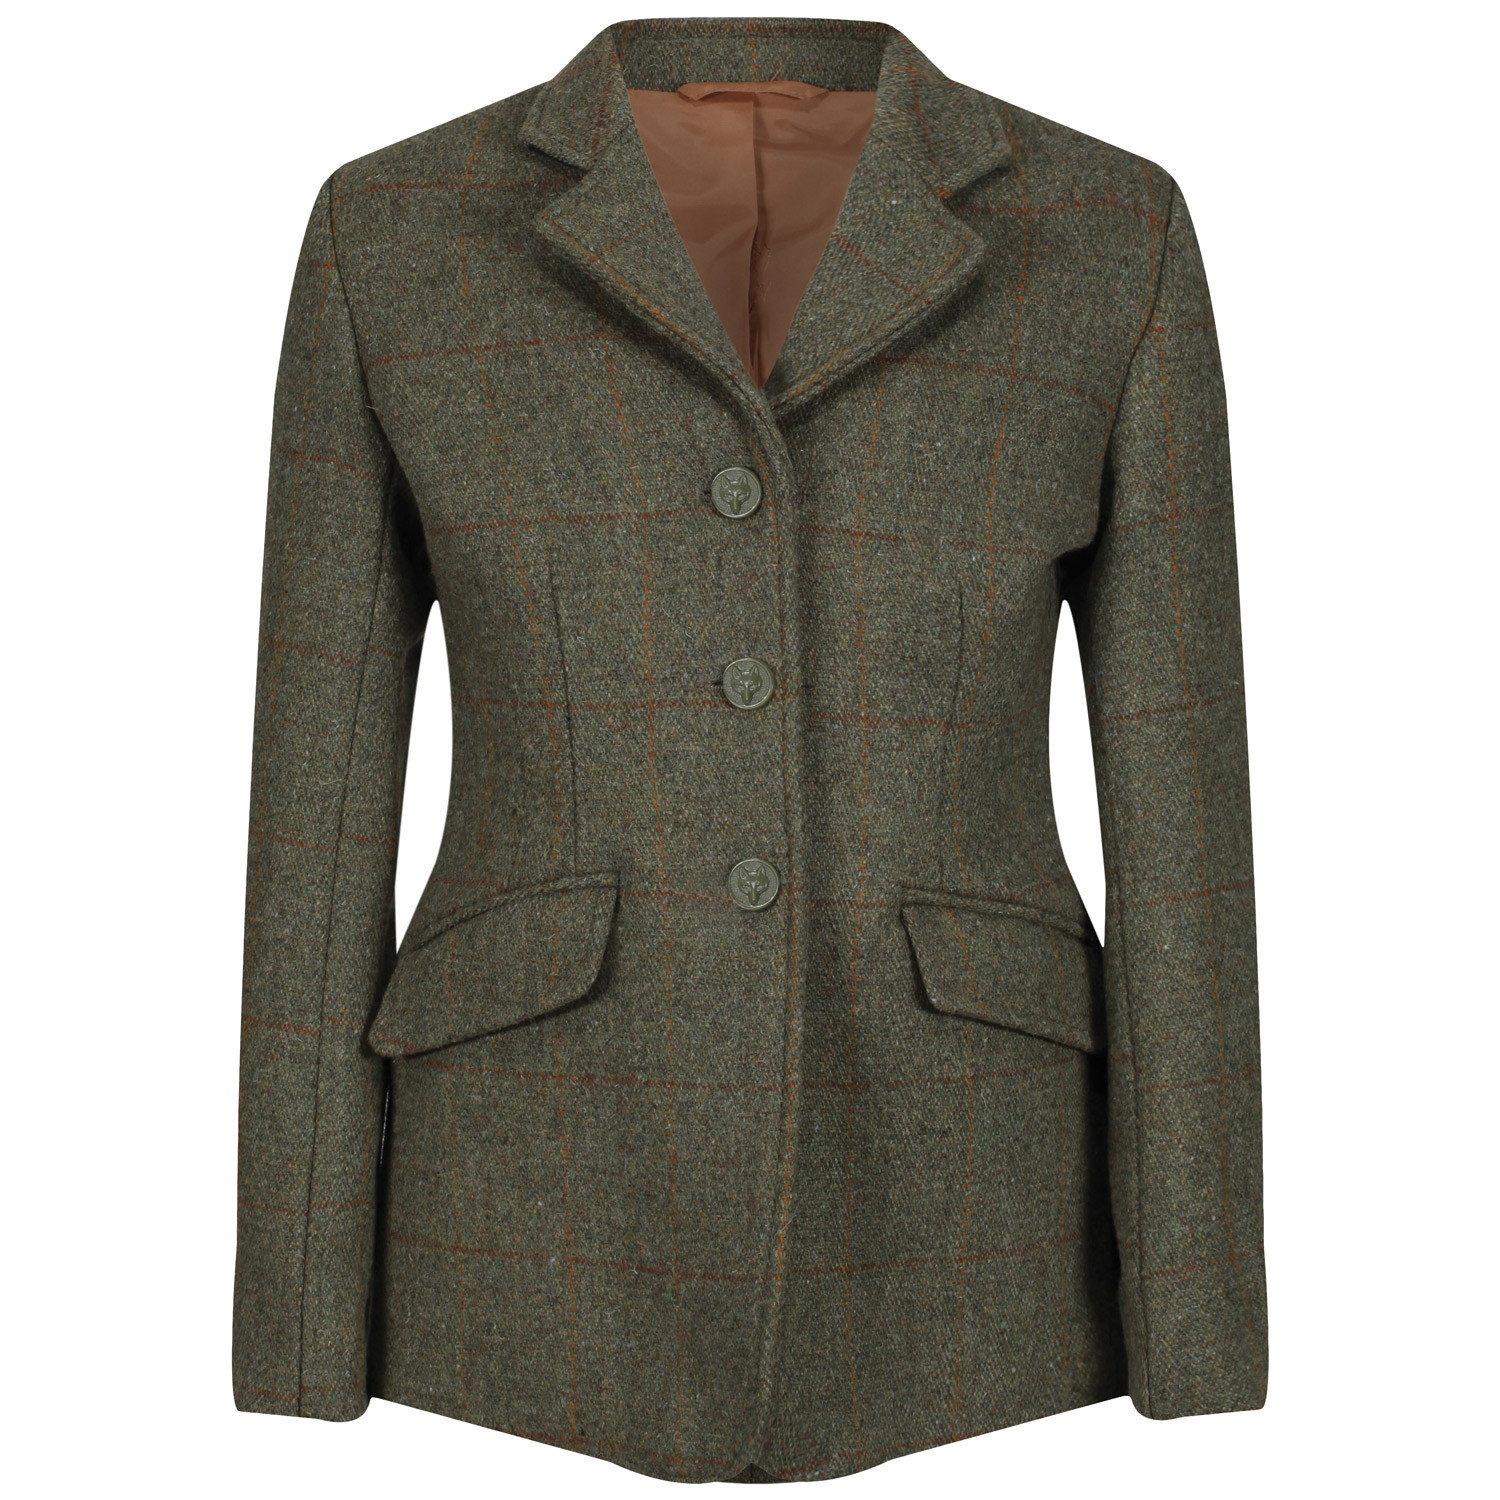 |**BARGAIN BUY** RRP £155|Equetech Foxbury Ladies Tweed Riding Jacket 